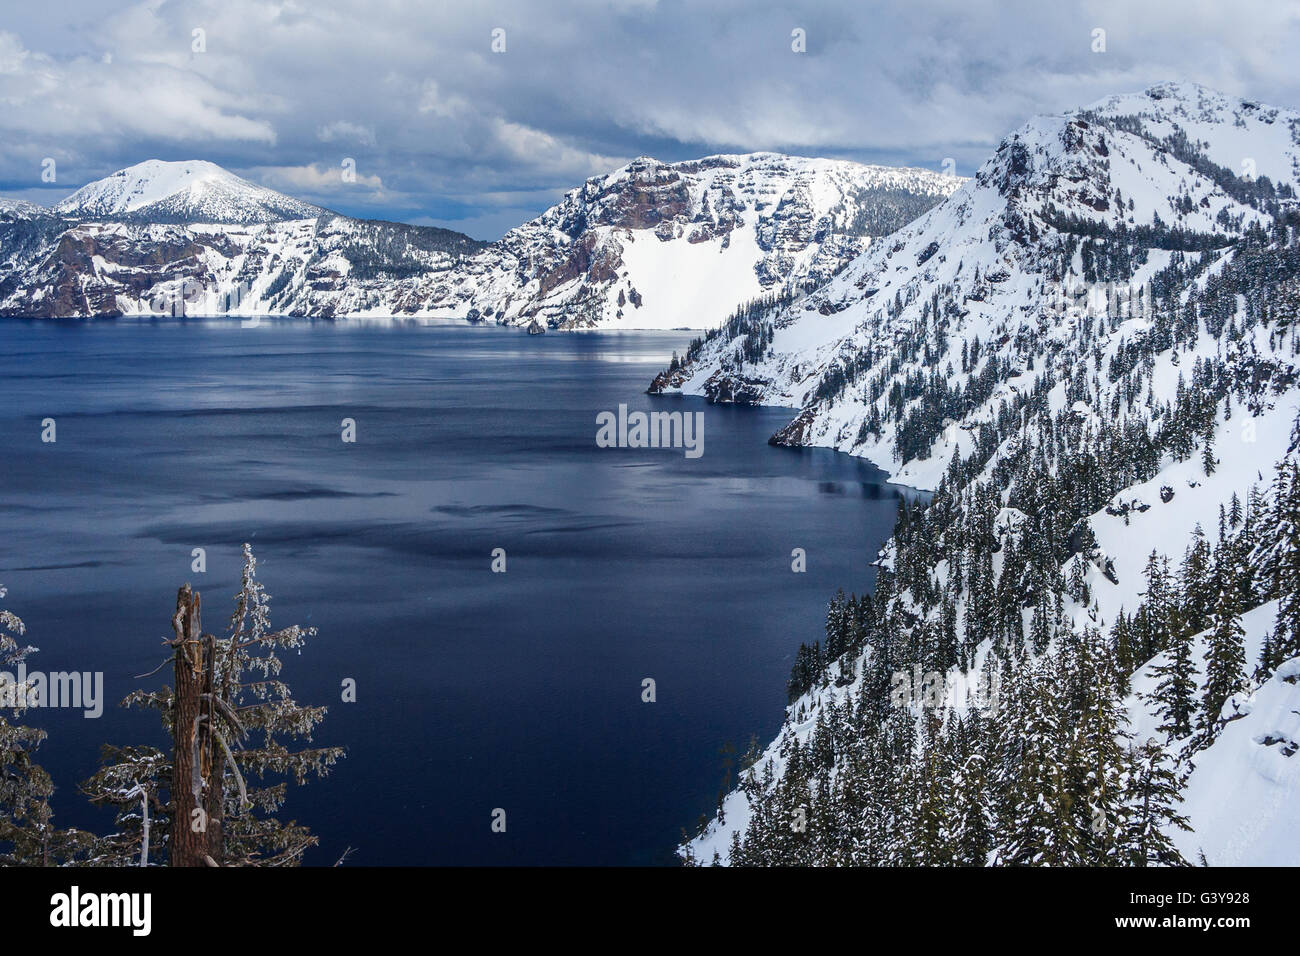 Caldera lake in Crater Lake National Park, Oregon, USA Stock Photo